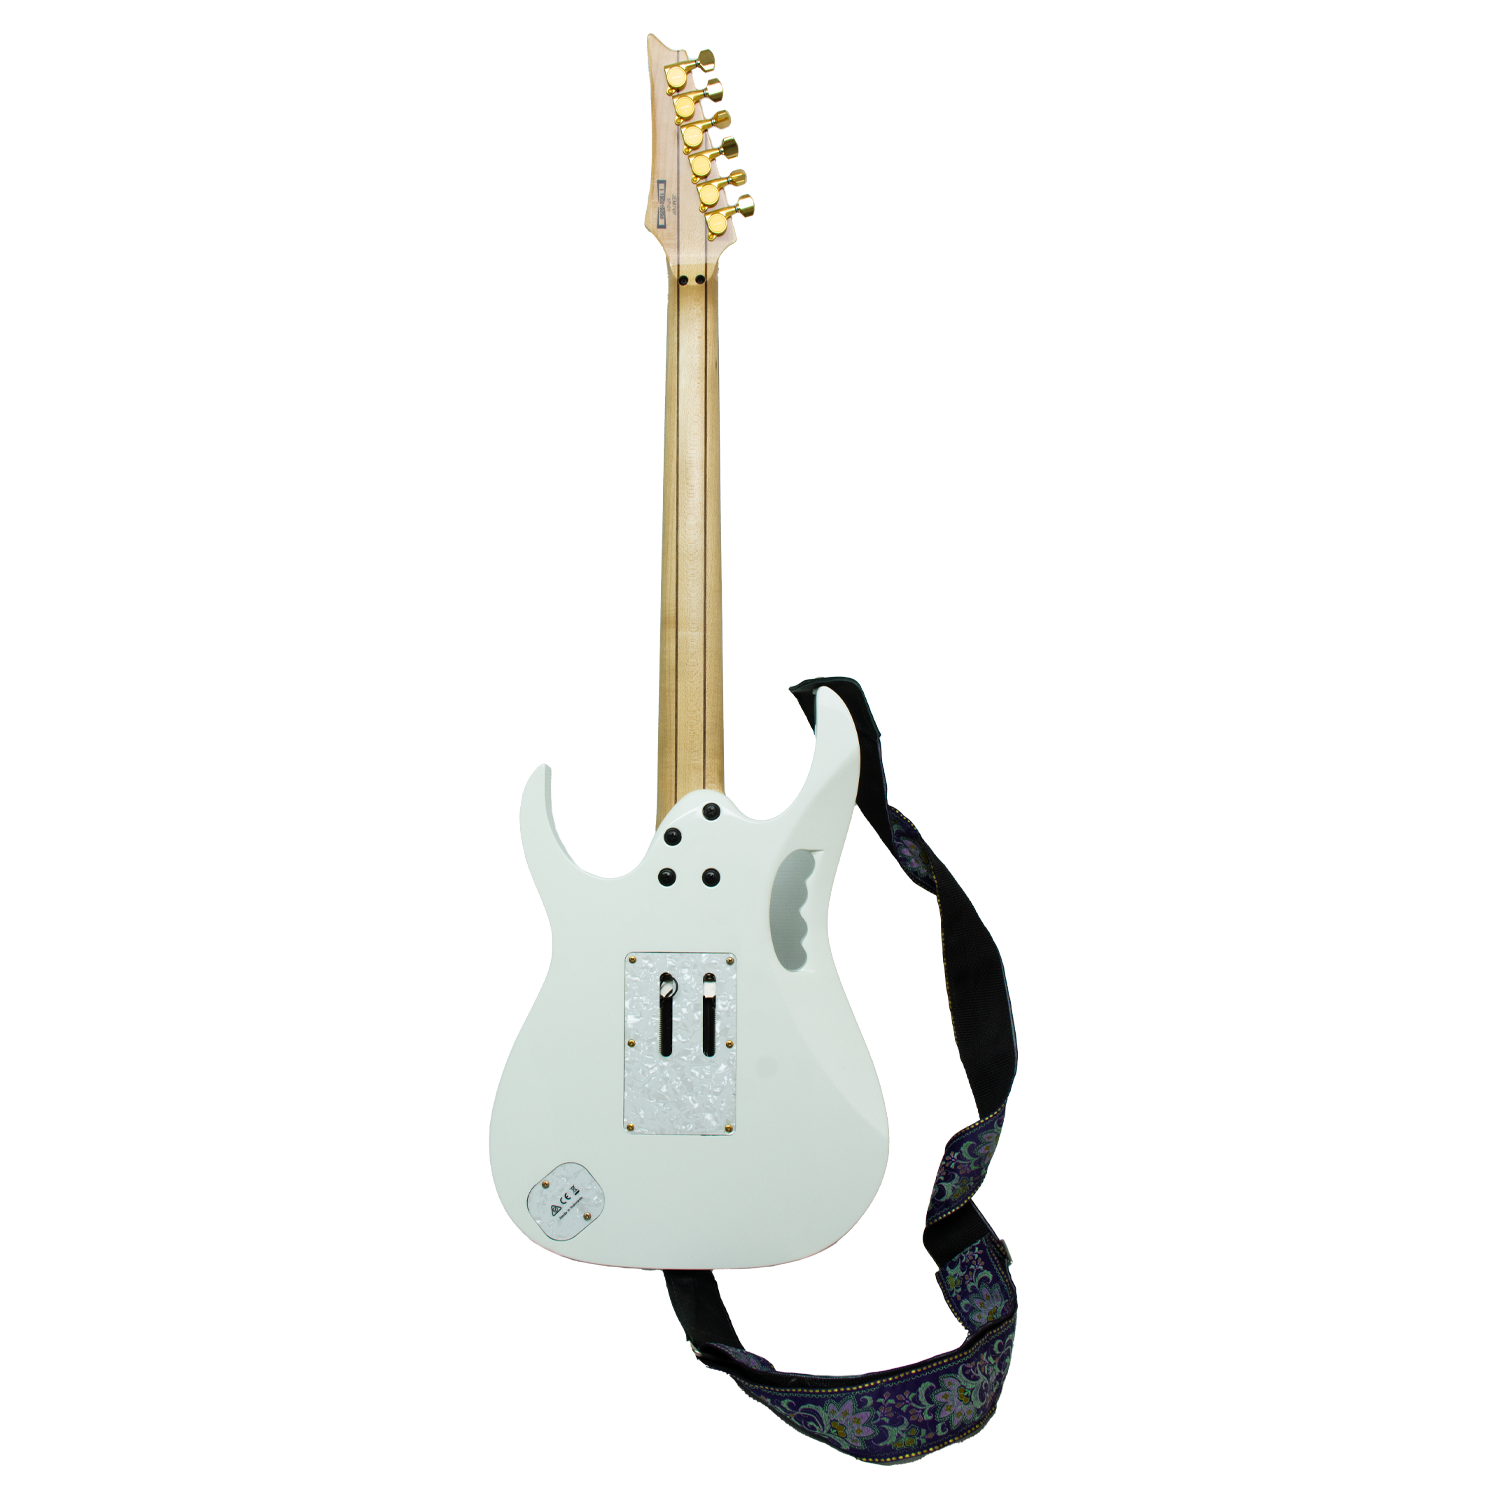 Ibanez JEM7VP Premium Electric Guitar - White